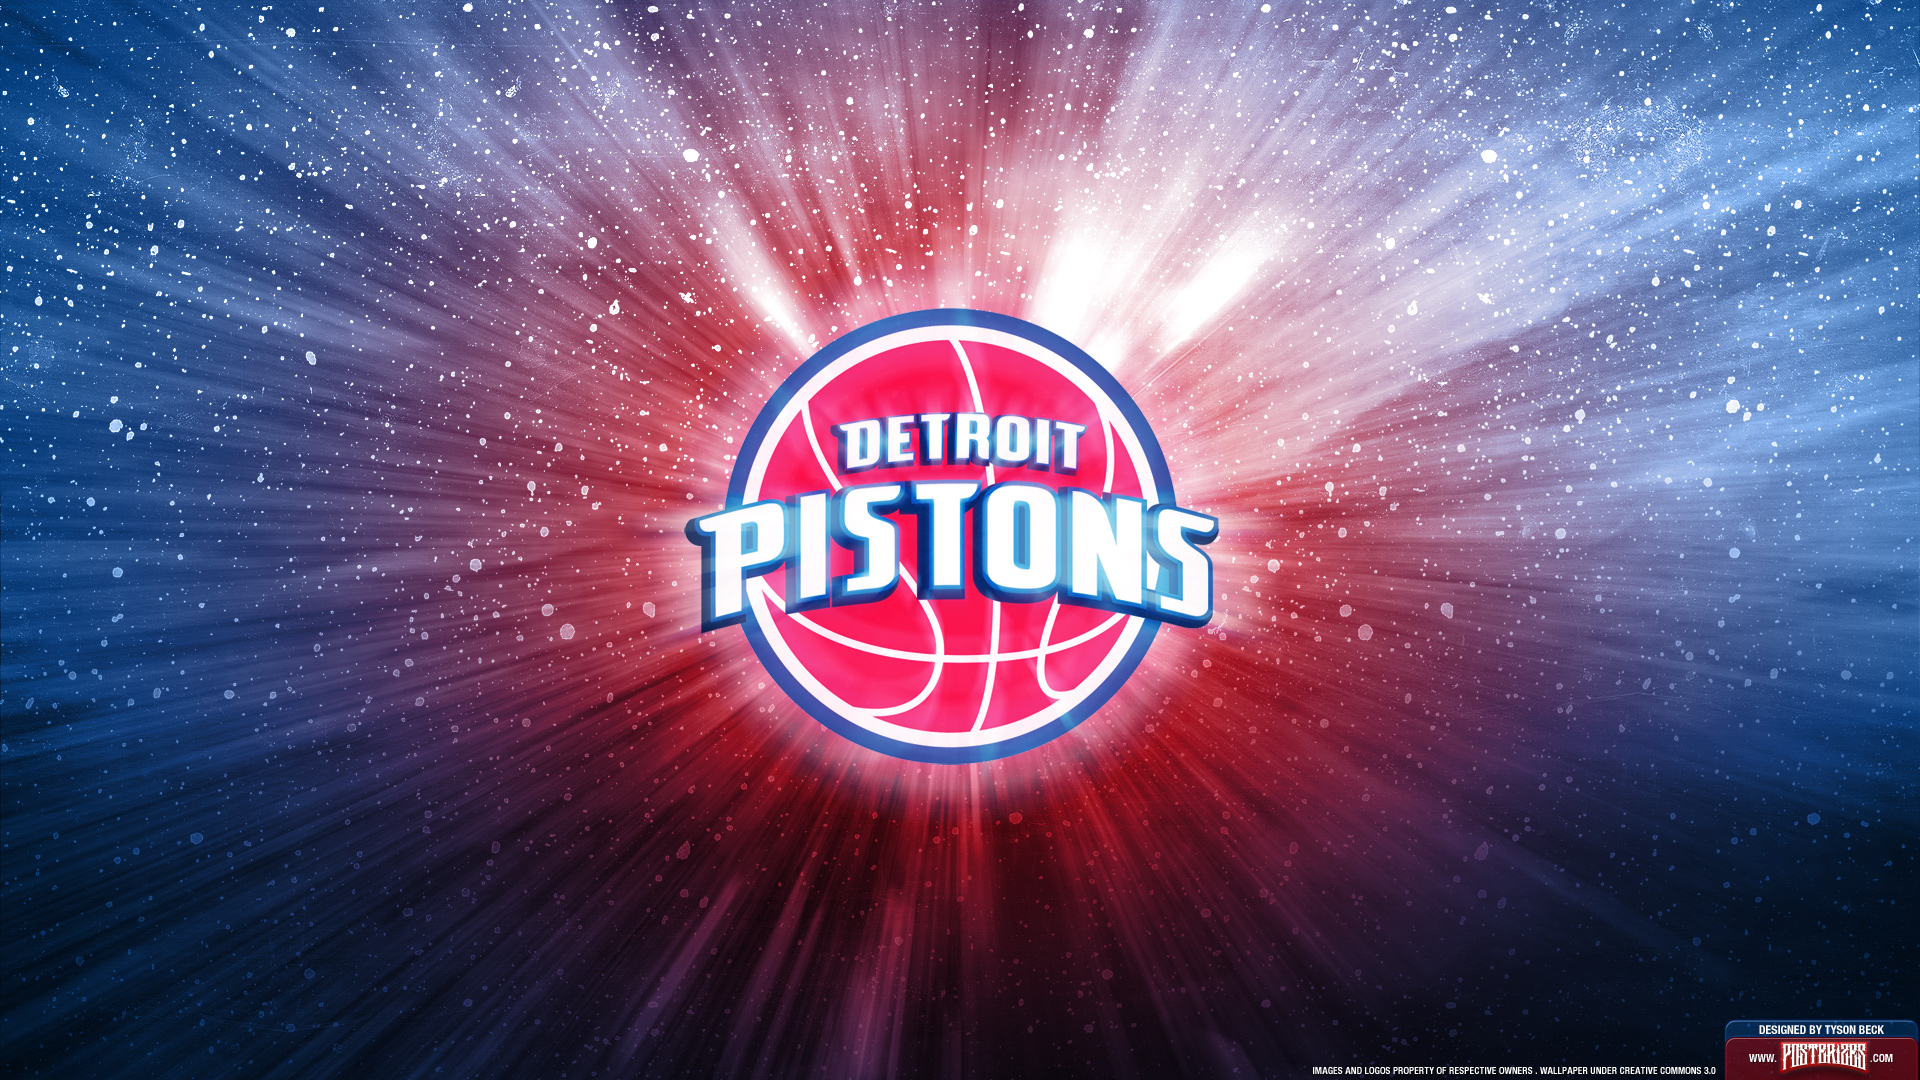 Detroit Pistons vs. Denver Nuggets Tickets, Detroit, Michigan, United States